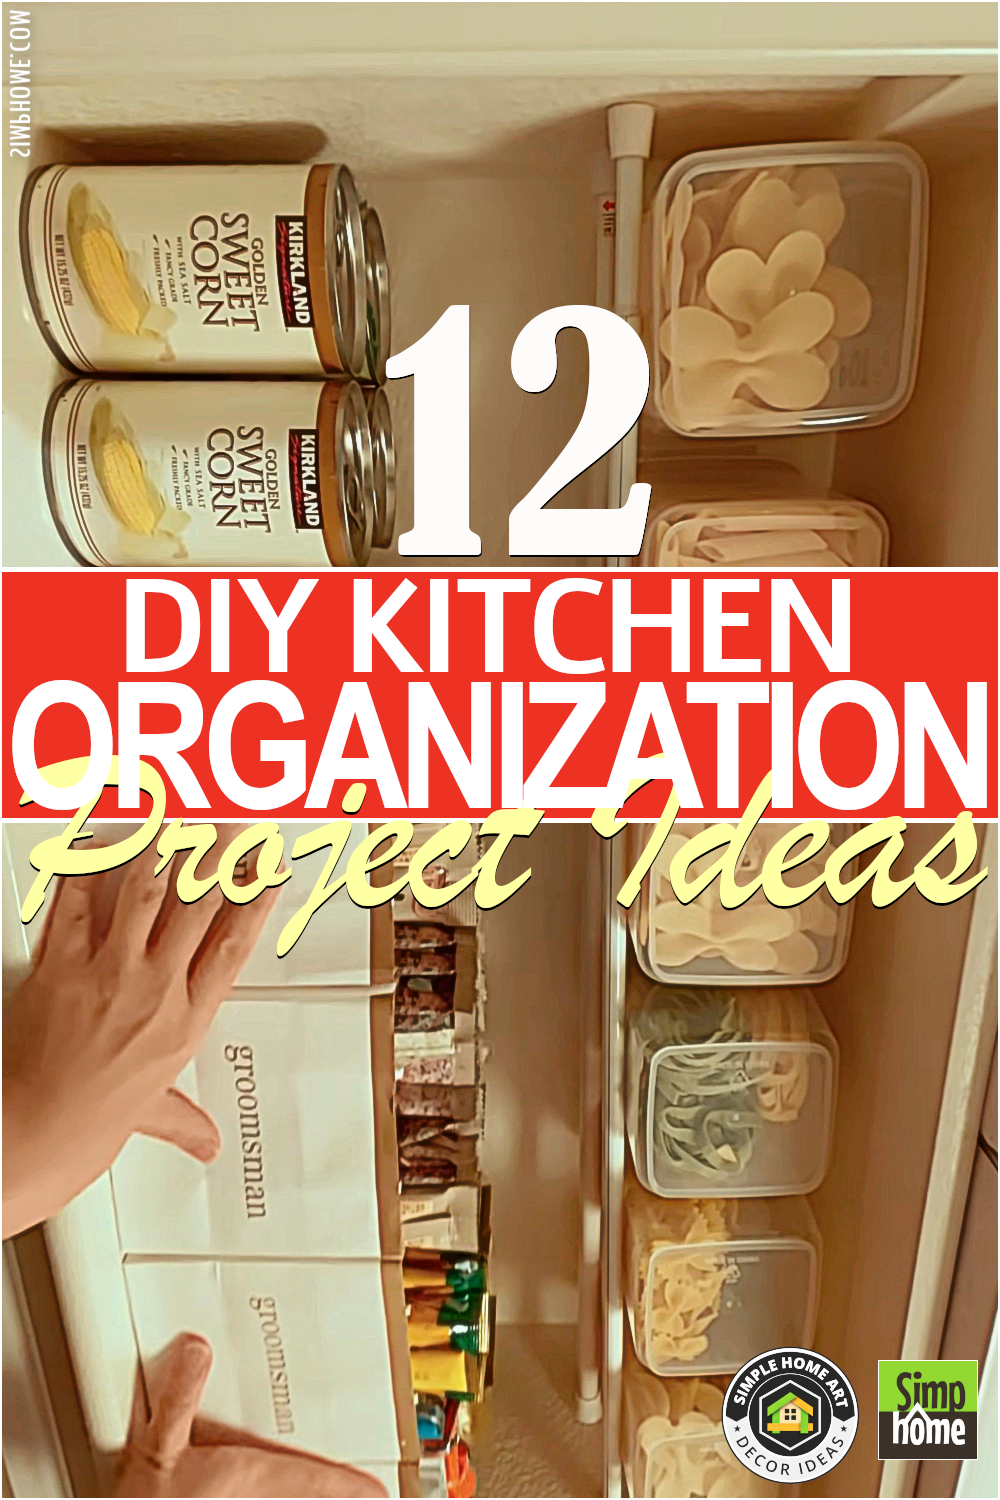 Kitchen management and DIY organizations